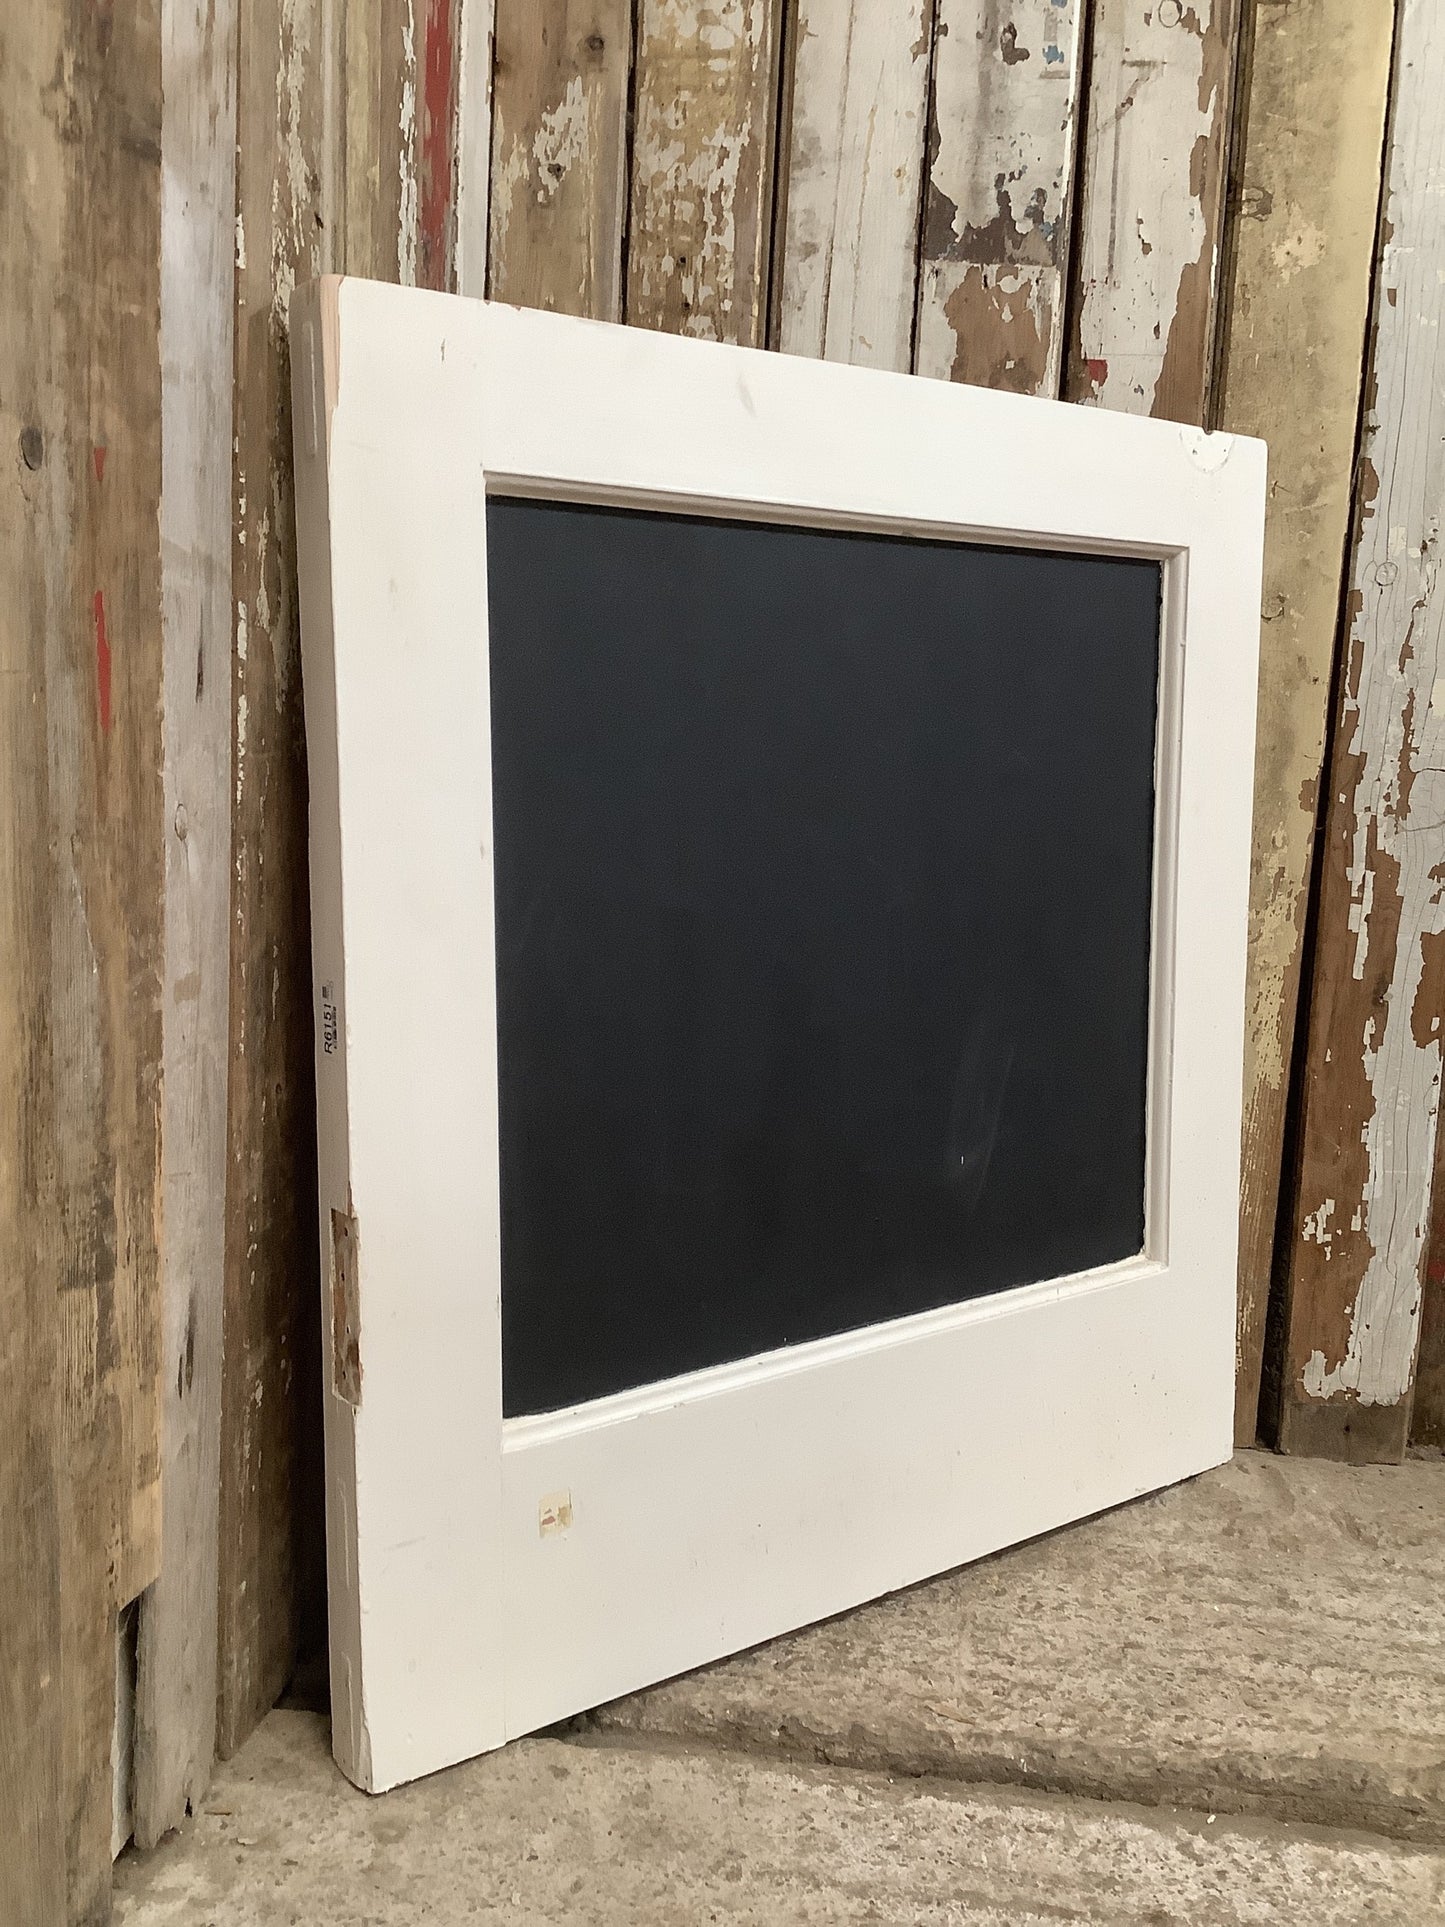 Repurposed White Painted Pine Doubled Sided Panel Blackboard Door 2'7"H 2'5" W